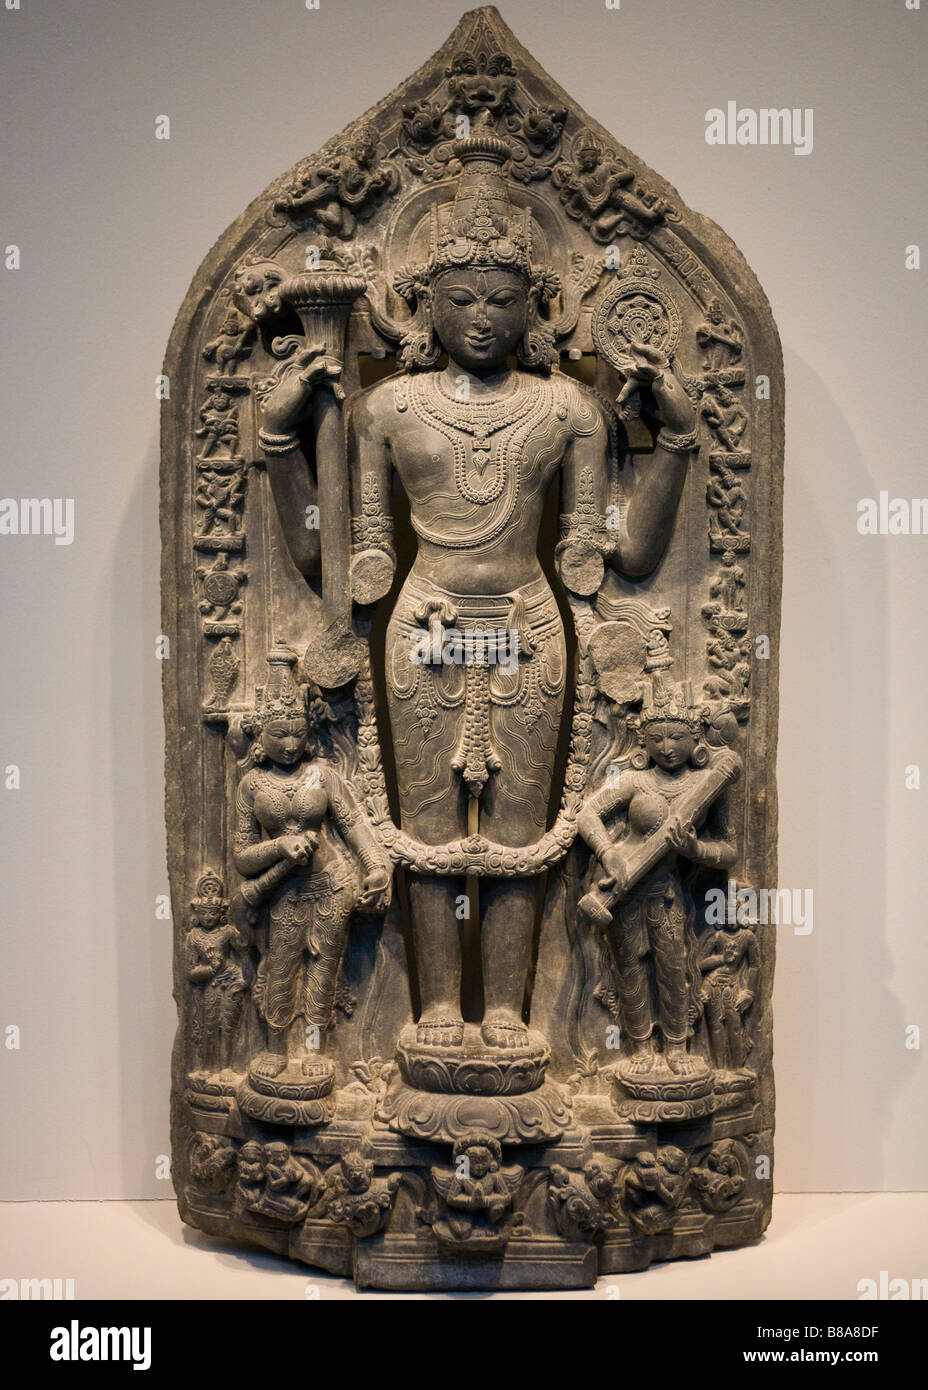 Vishnu with Avatars - Hindu idol sculpture Stock Photo